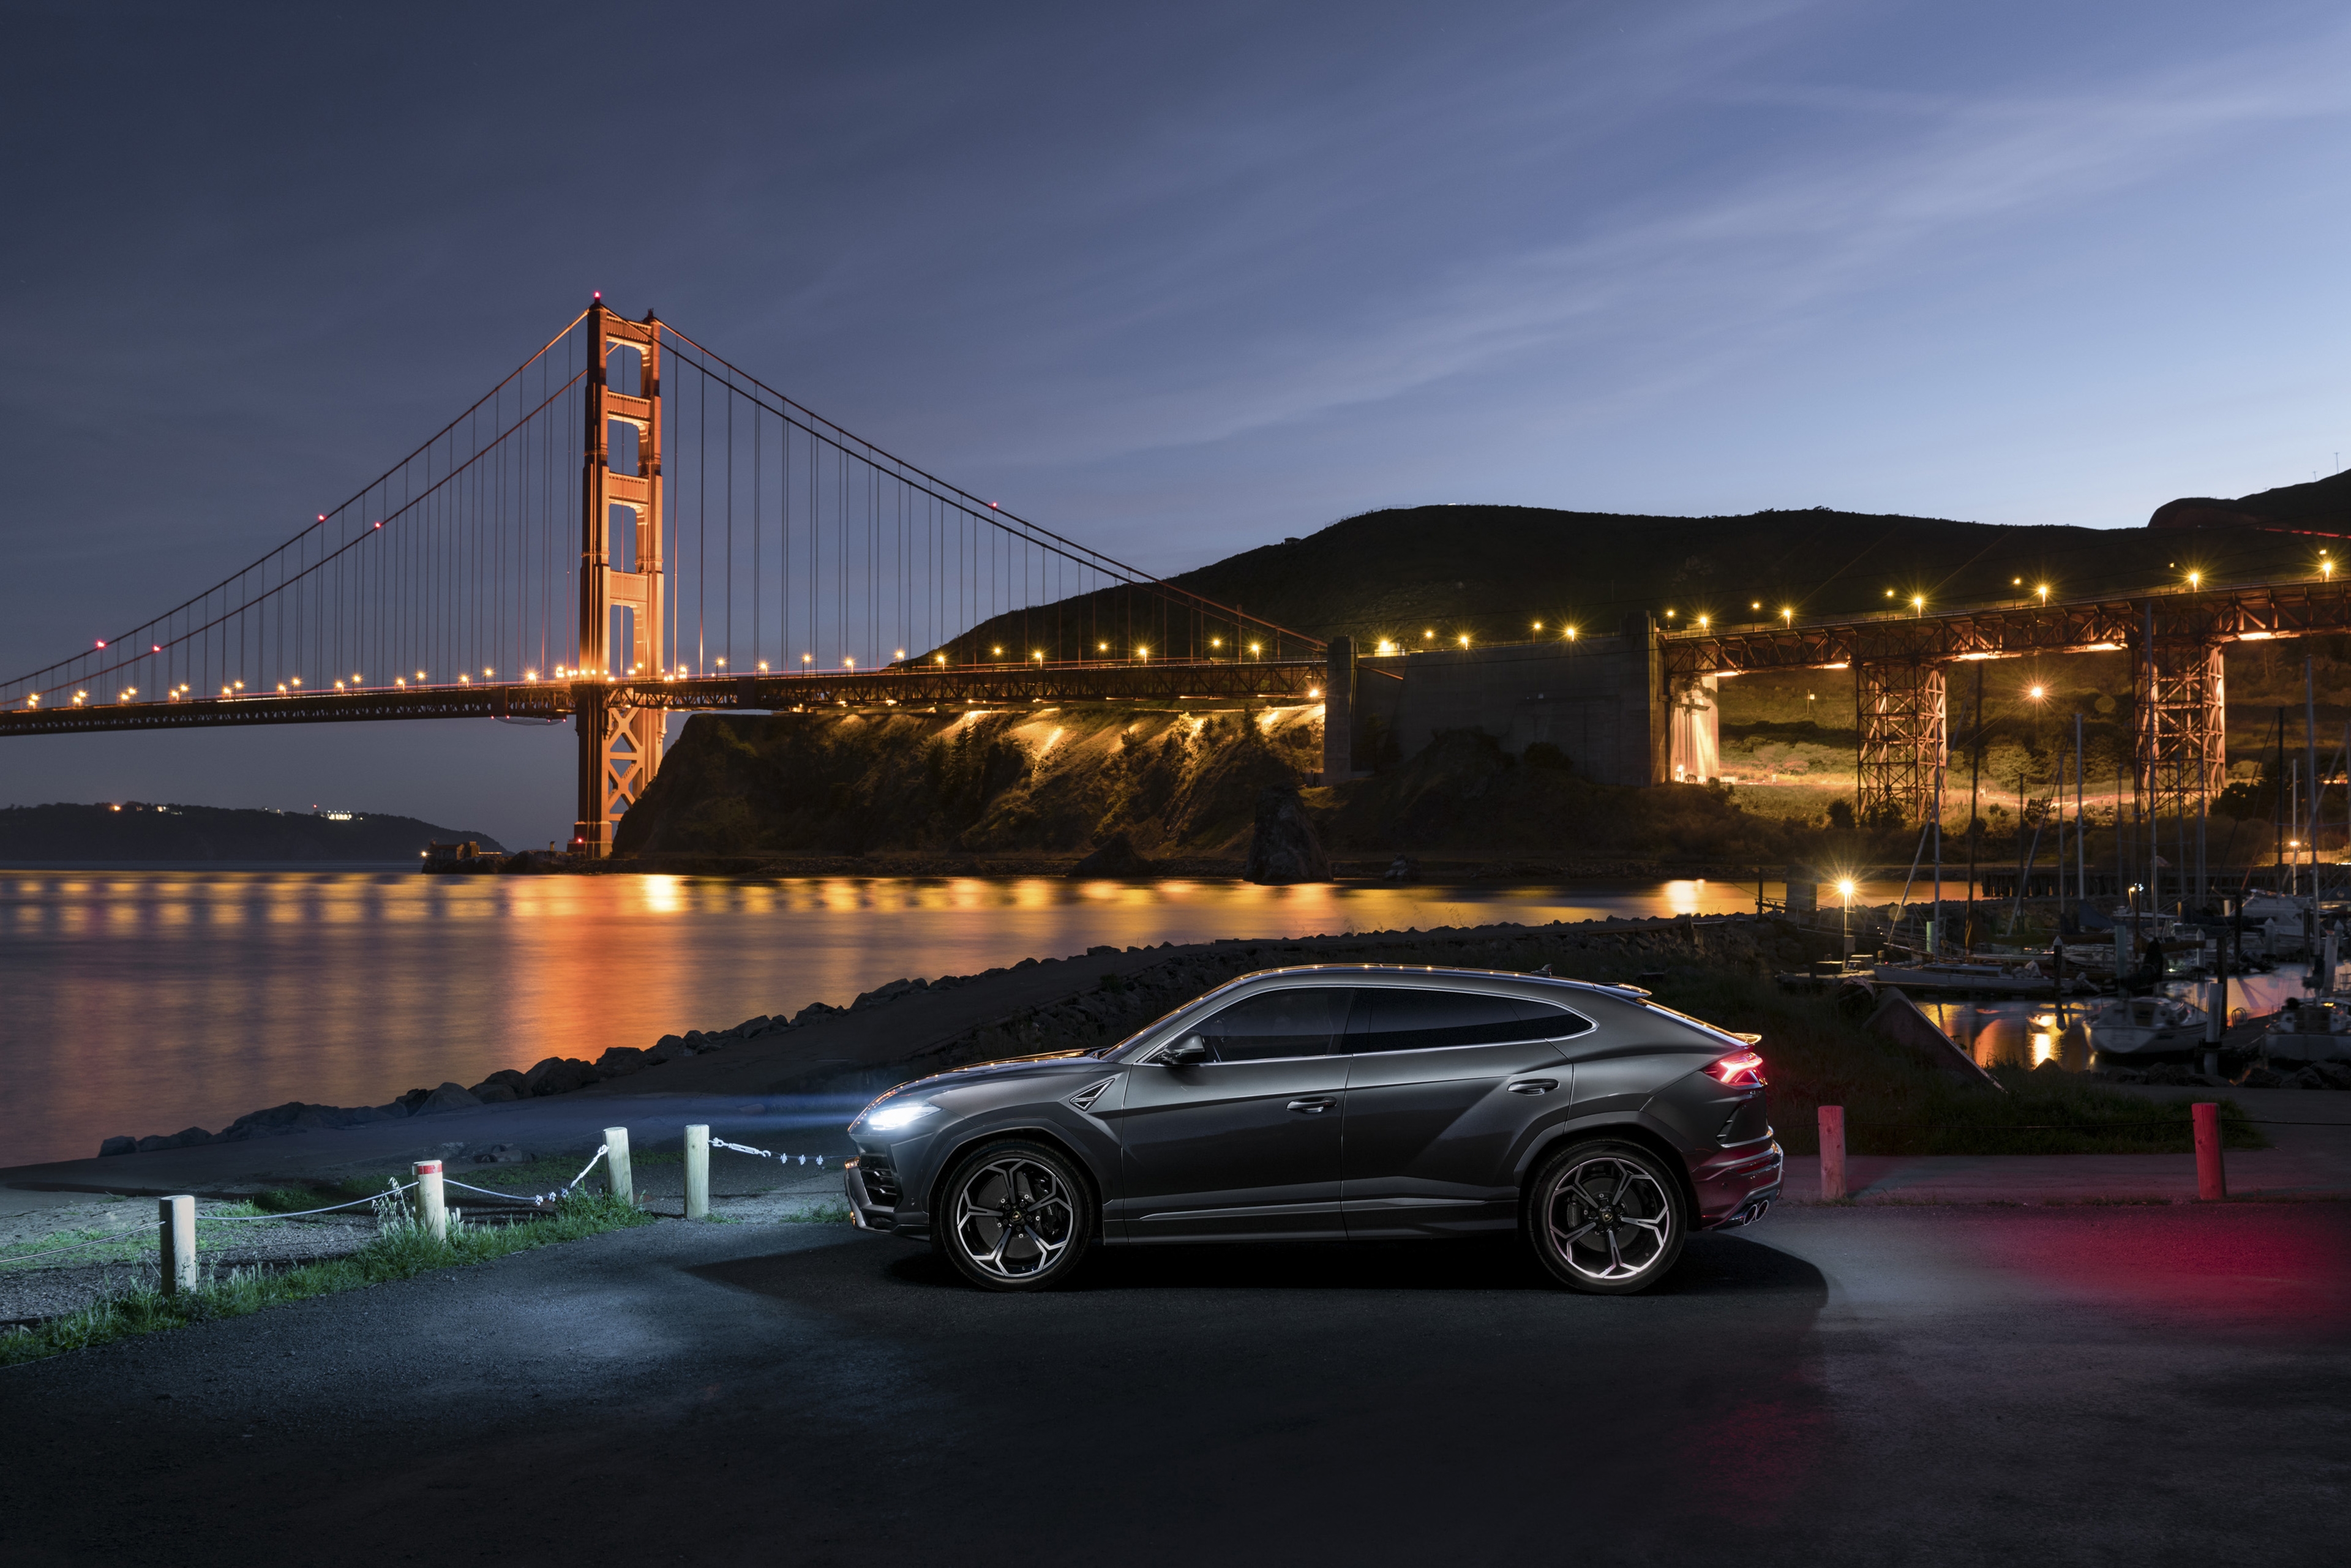 HD wallpaper, 2021, Anniversary, Lamborghini Urus, Golden Gate Bridge